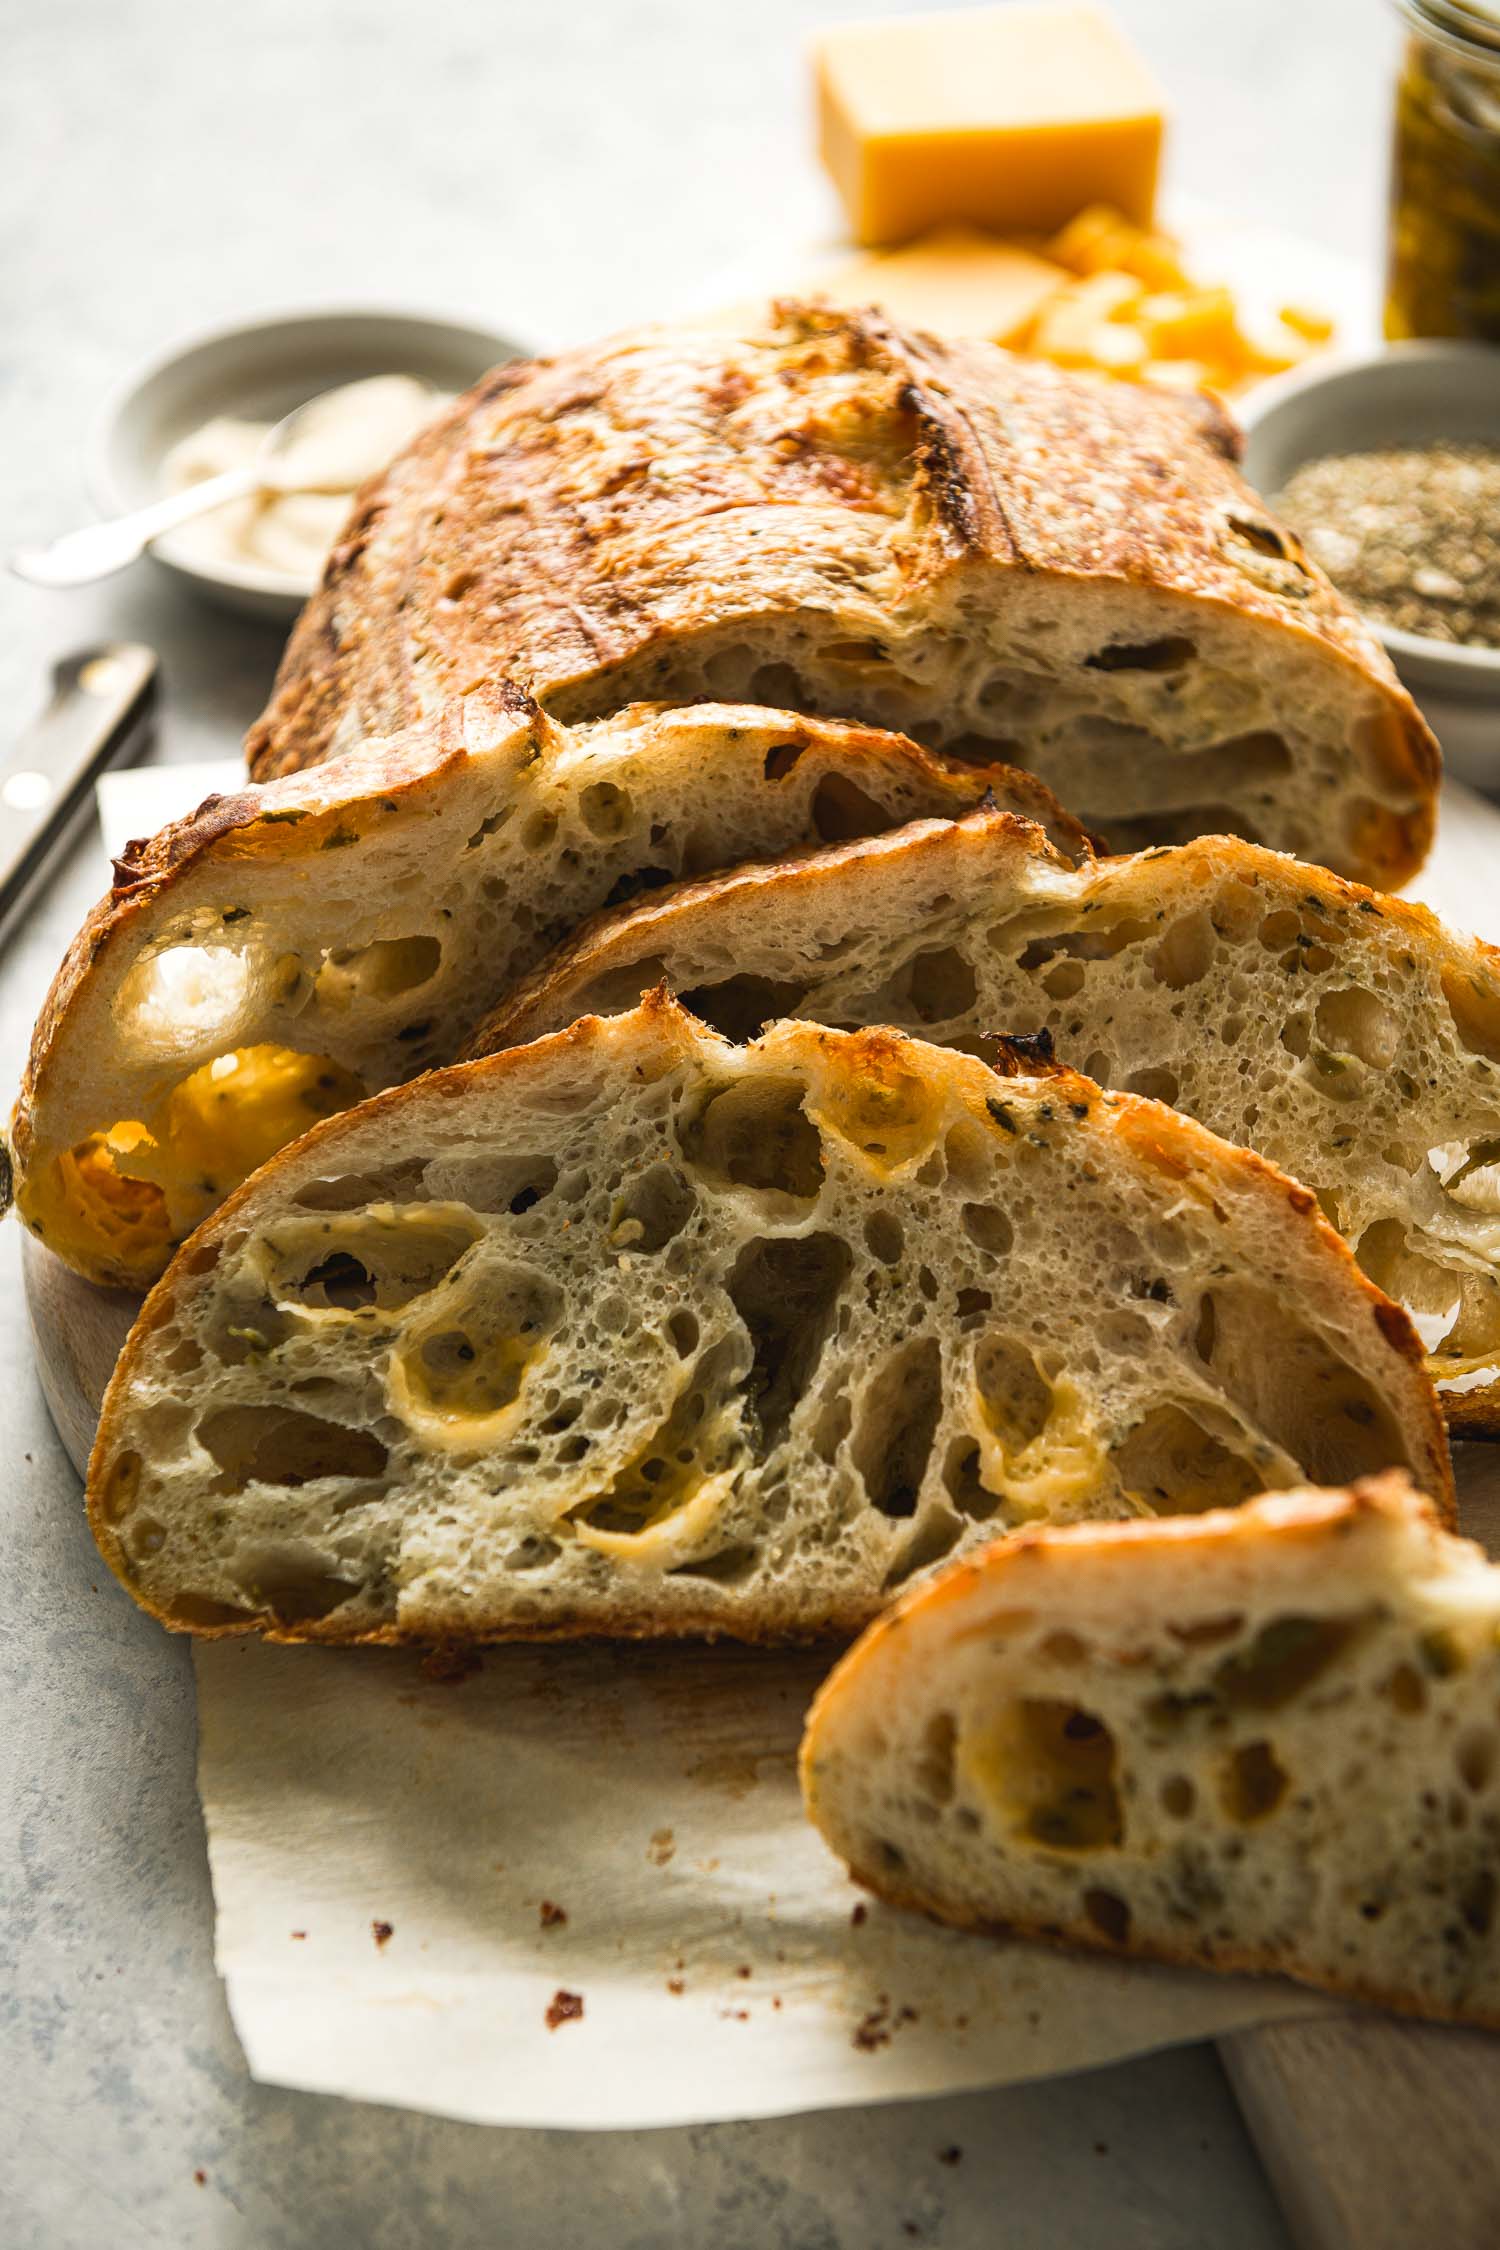 https://lemonsandanchovies.com/wp-content/uploads/2021/03/Jalapeno-Cheddar-Sourdough-Bread-6.jpg